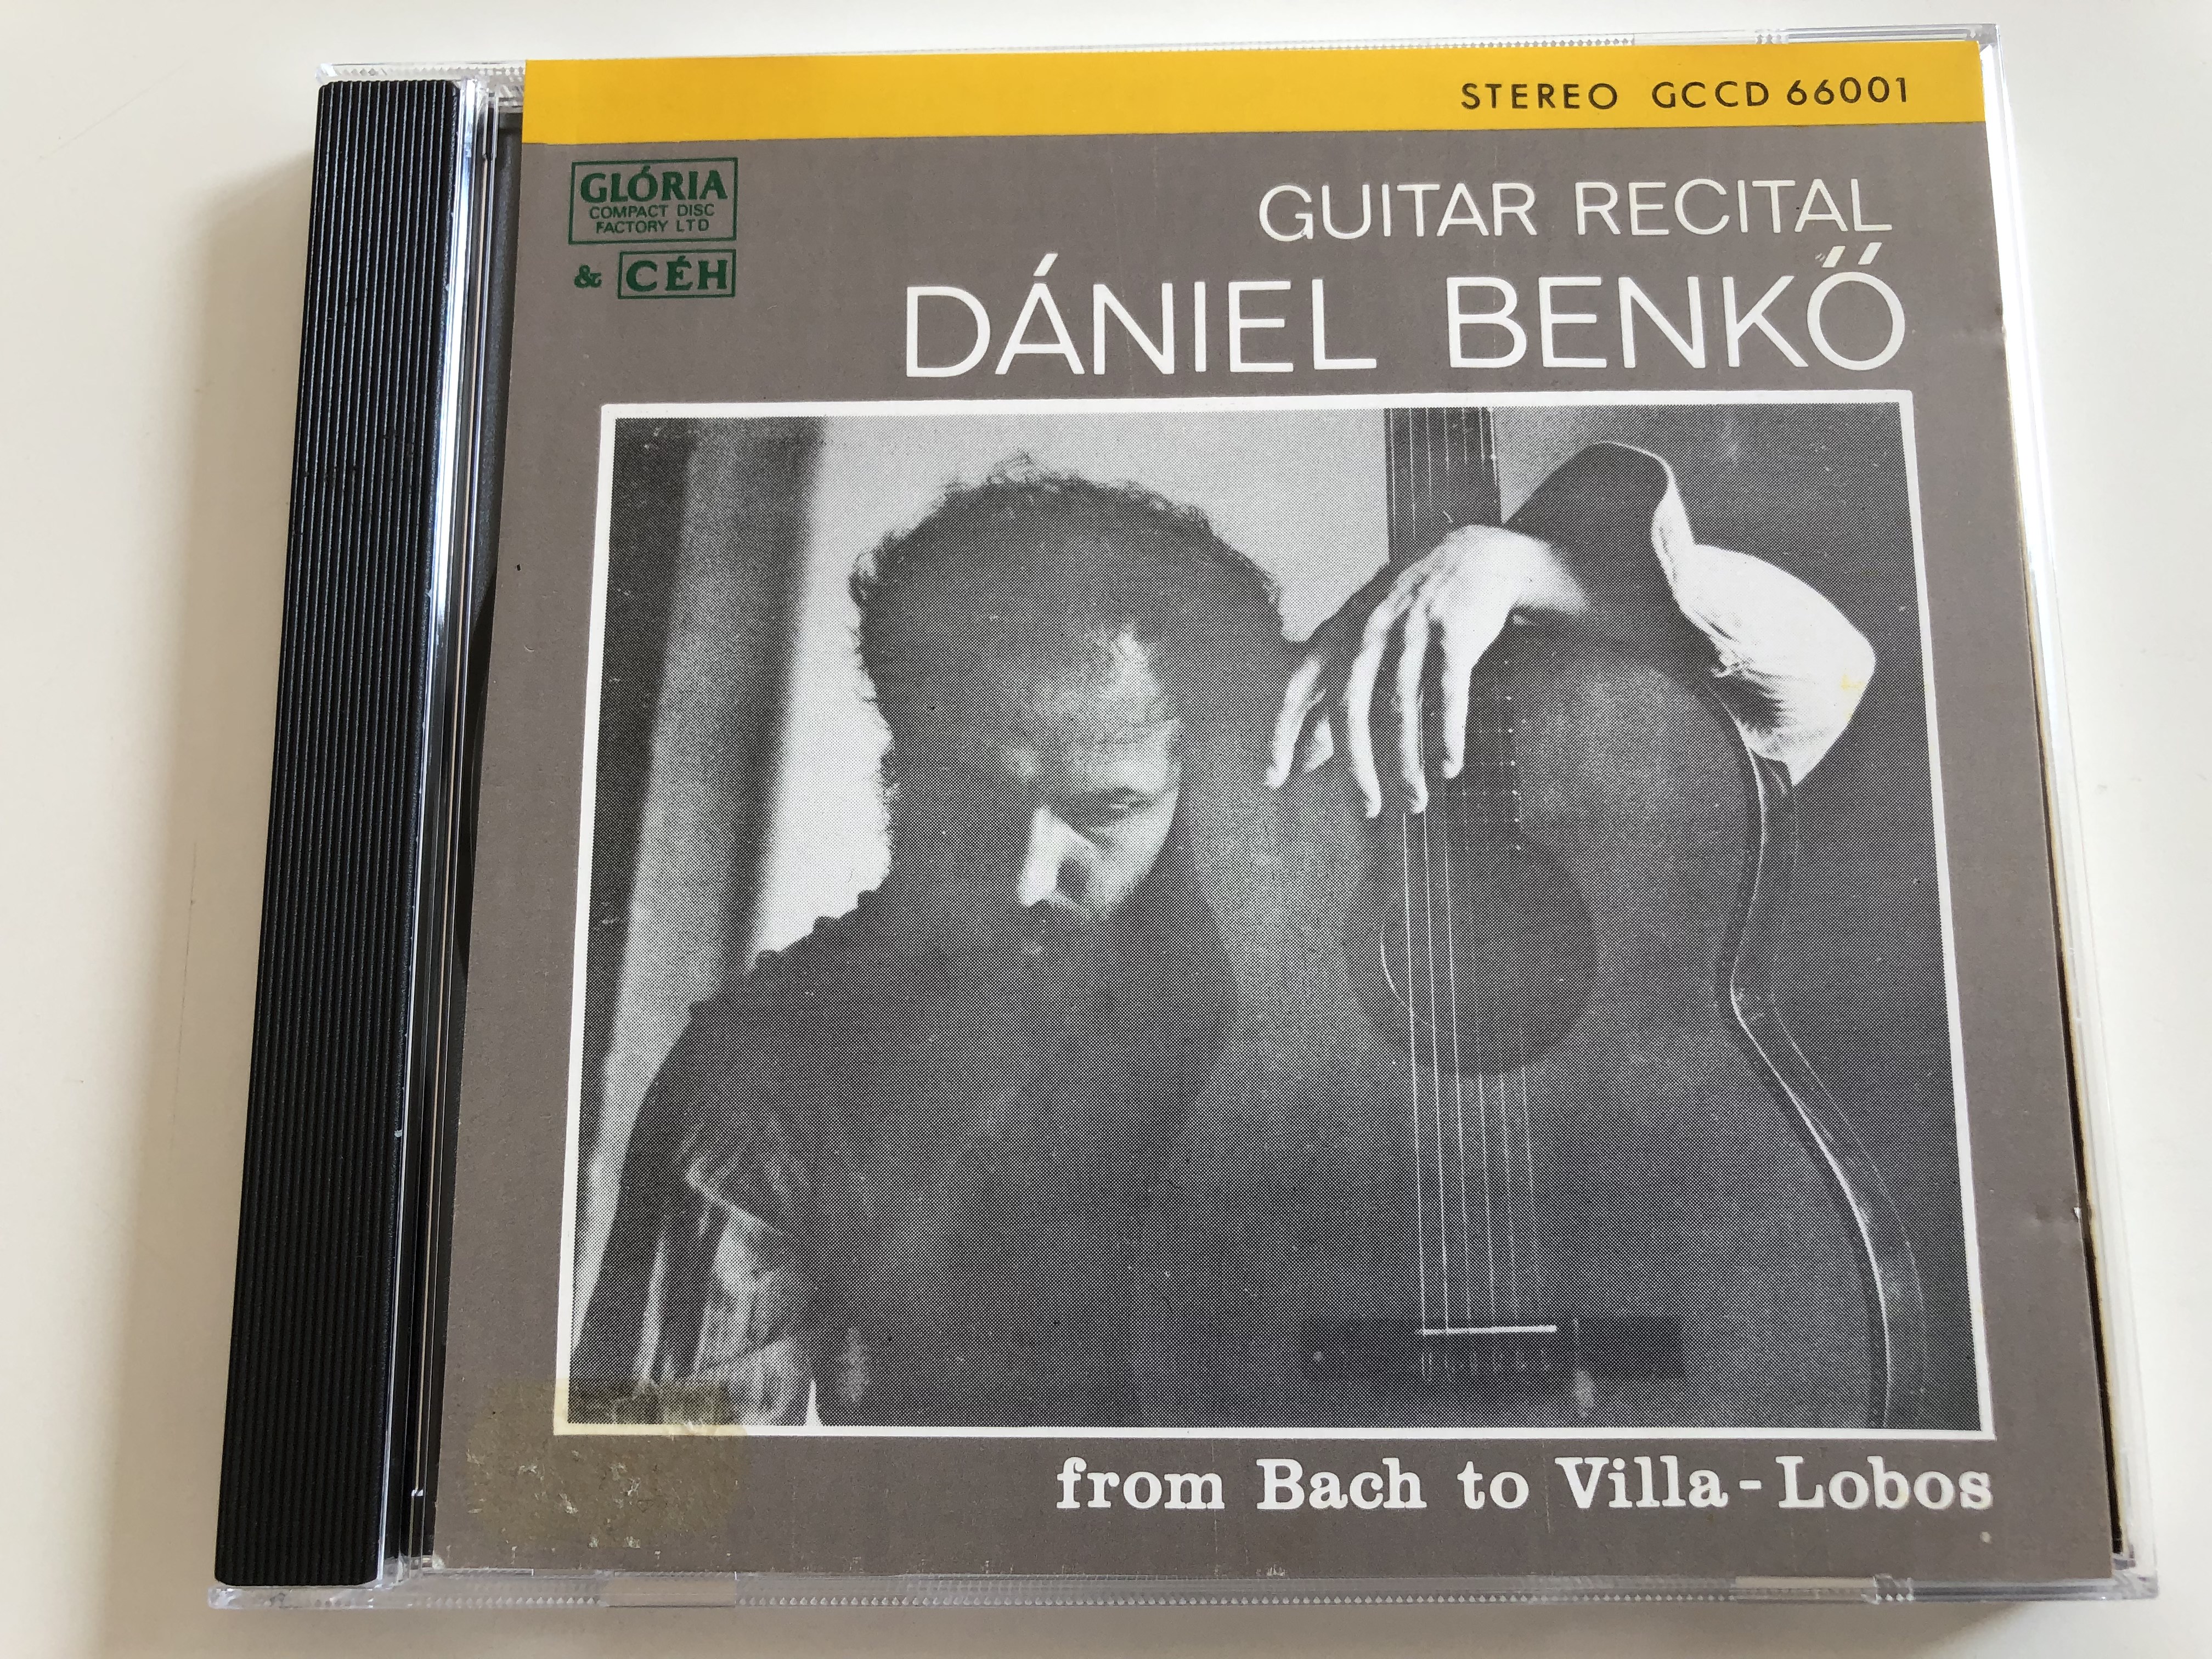 d-niel-benk-guitar-recital-from-bach-to-villa-lobos-stereo-gccd-66001-audio-cd-1989-1-.jpg